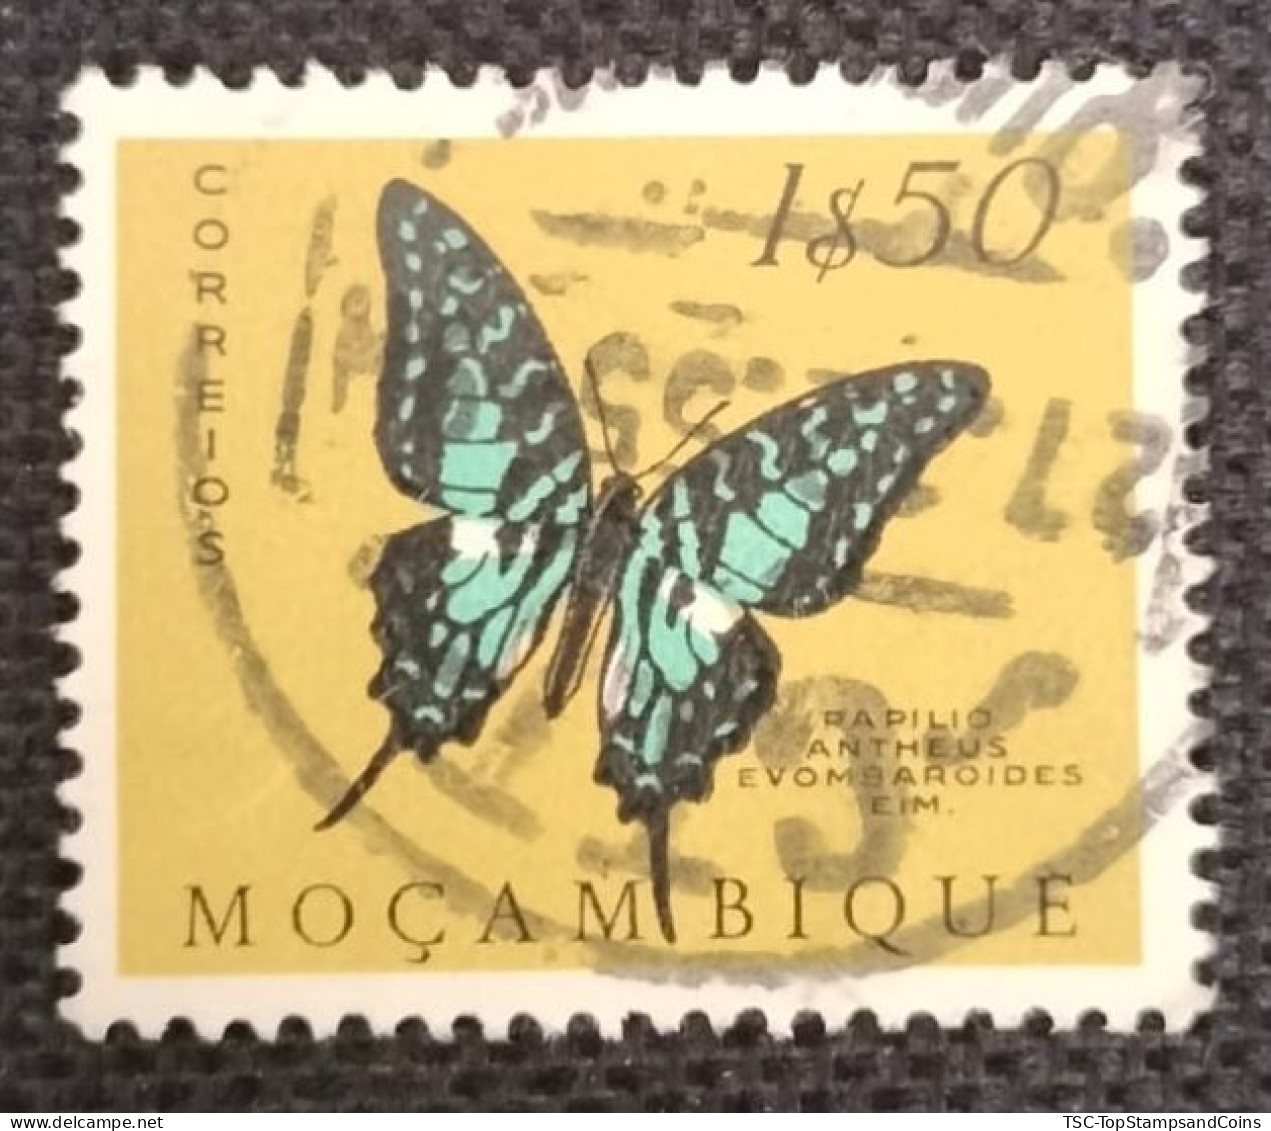 MOZPO0396UD - Mozambique Butterflies  - 1$50 Used Stamp - Mozambique - 1953 - Mozambique